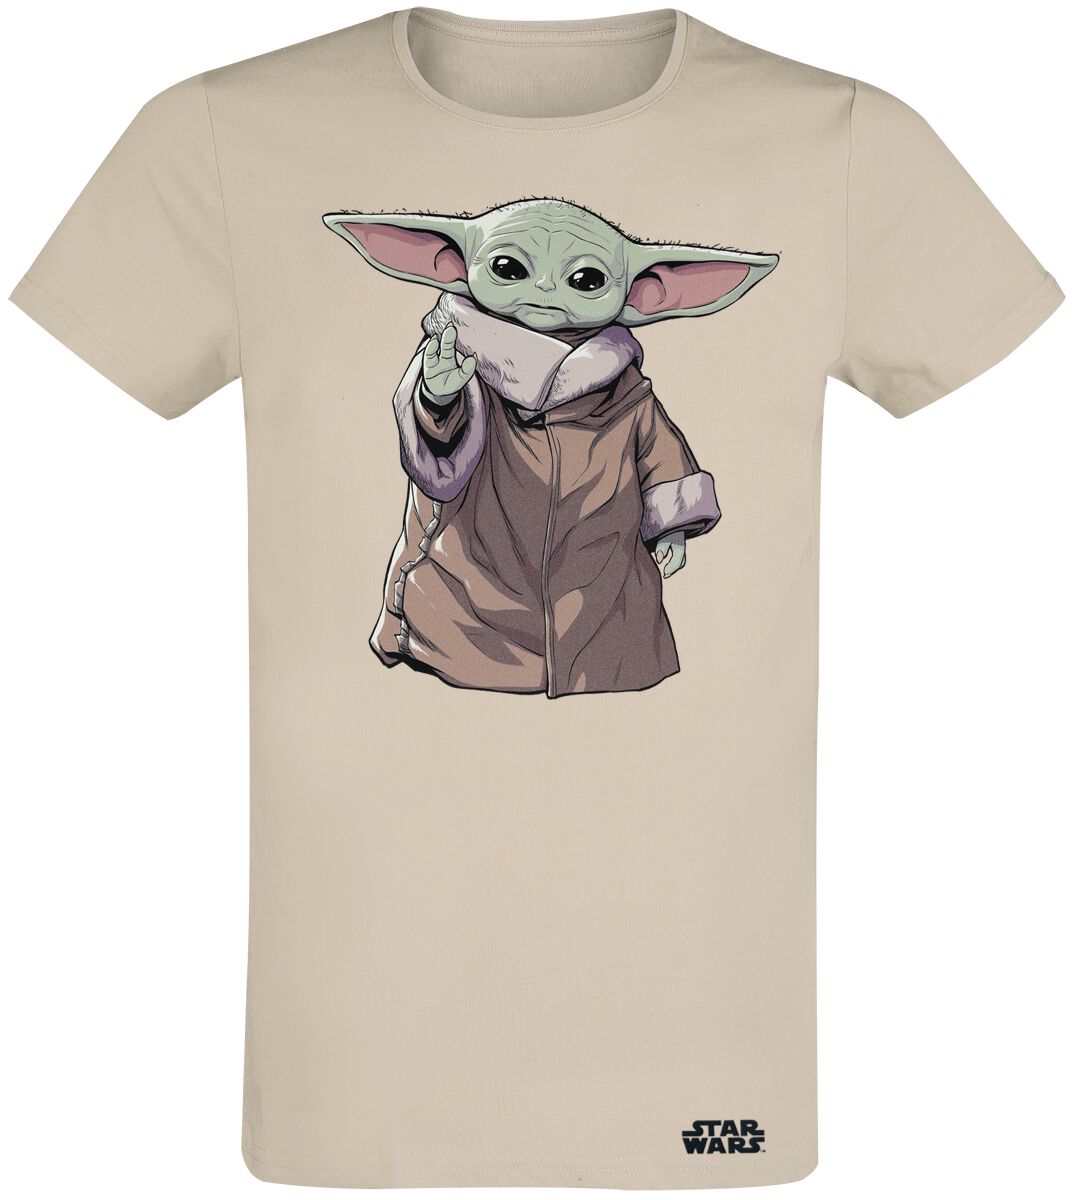 Star Wars Kids - The Mandalorian - Baby Yoda - Grogu T-Shirt multicolour